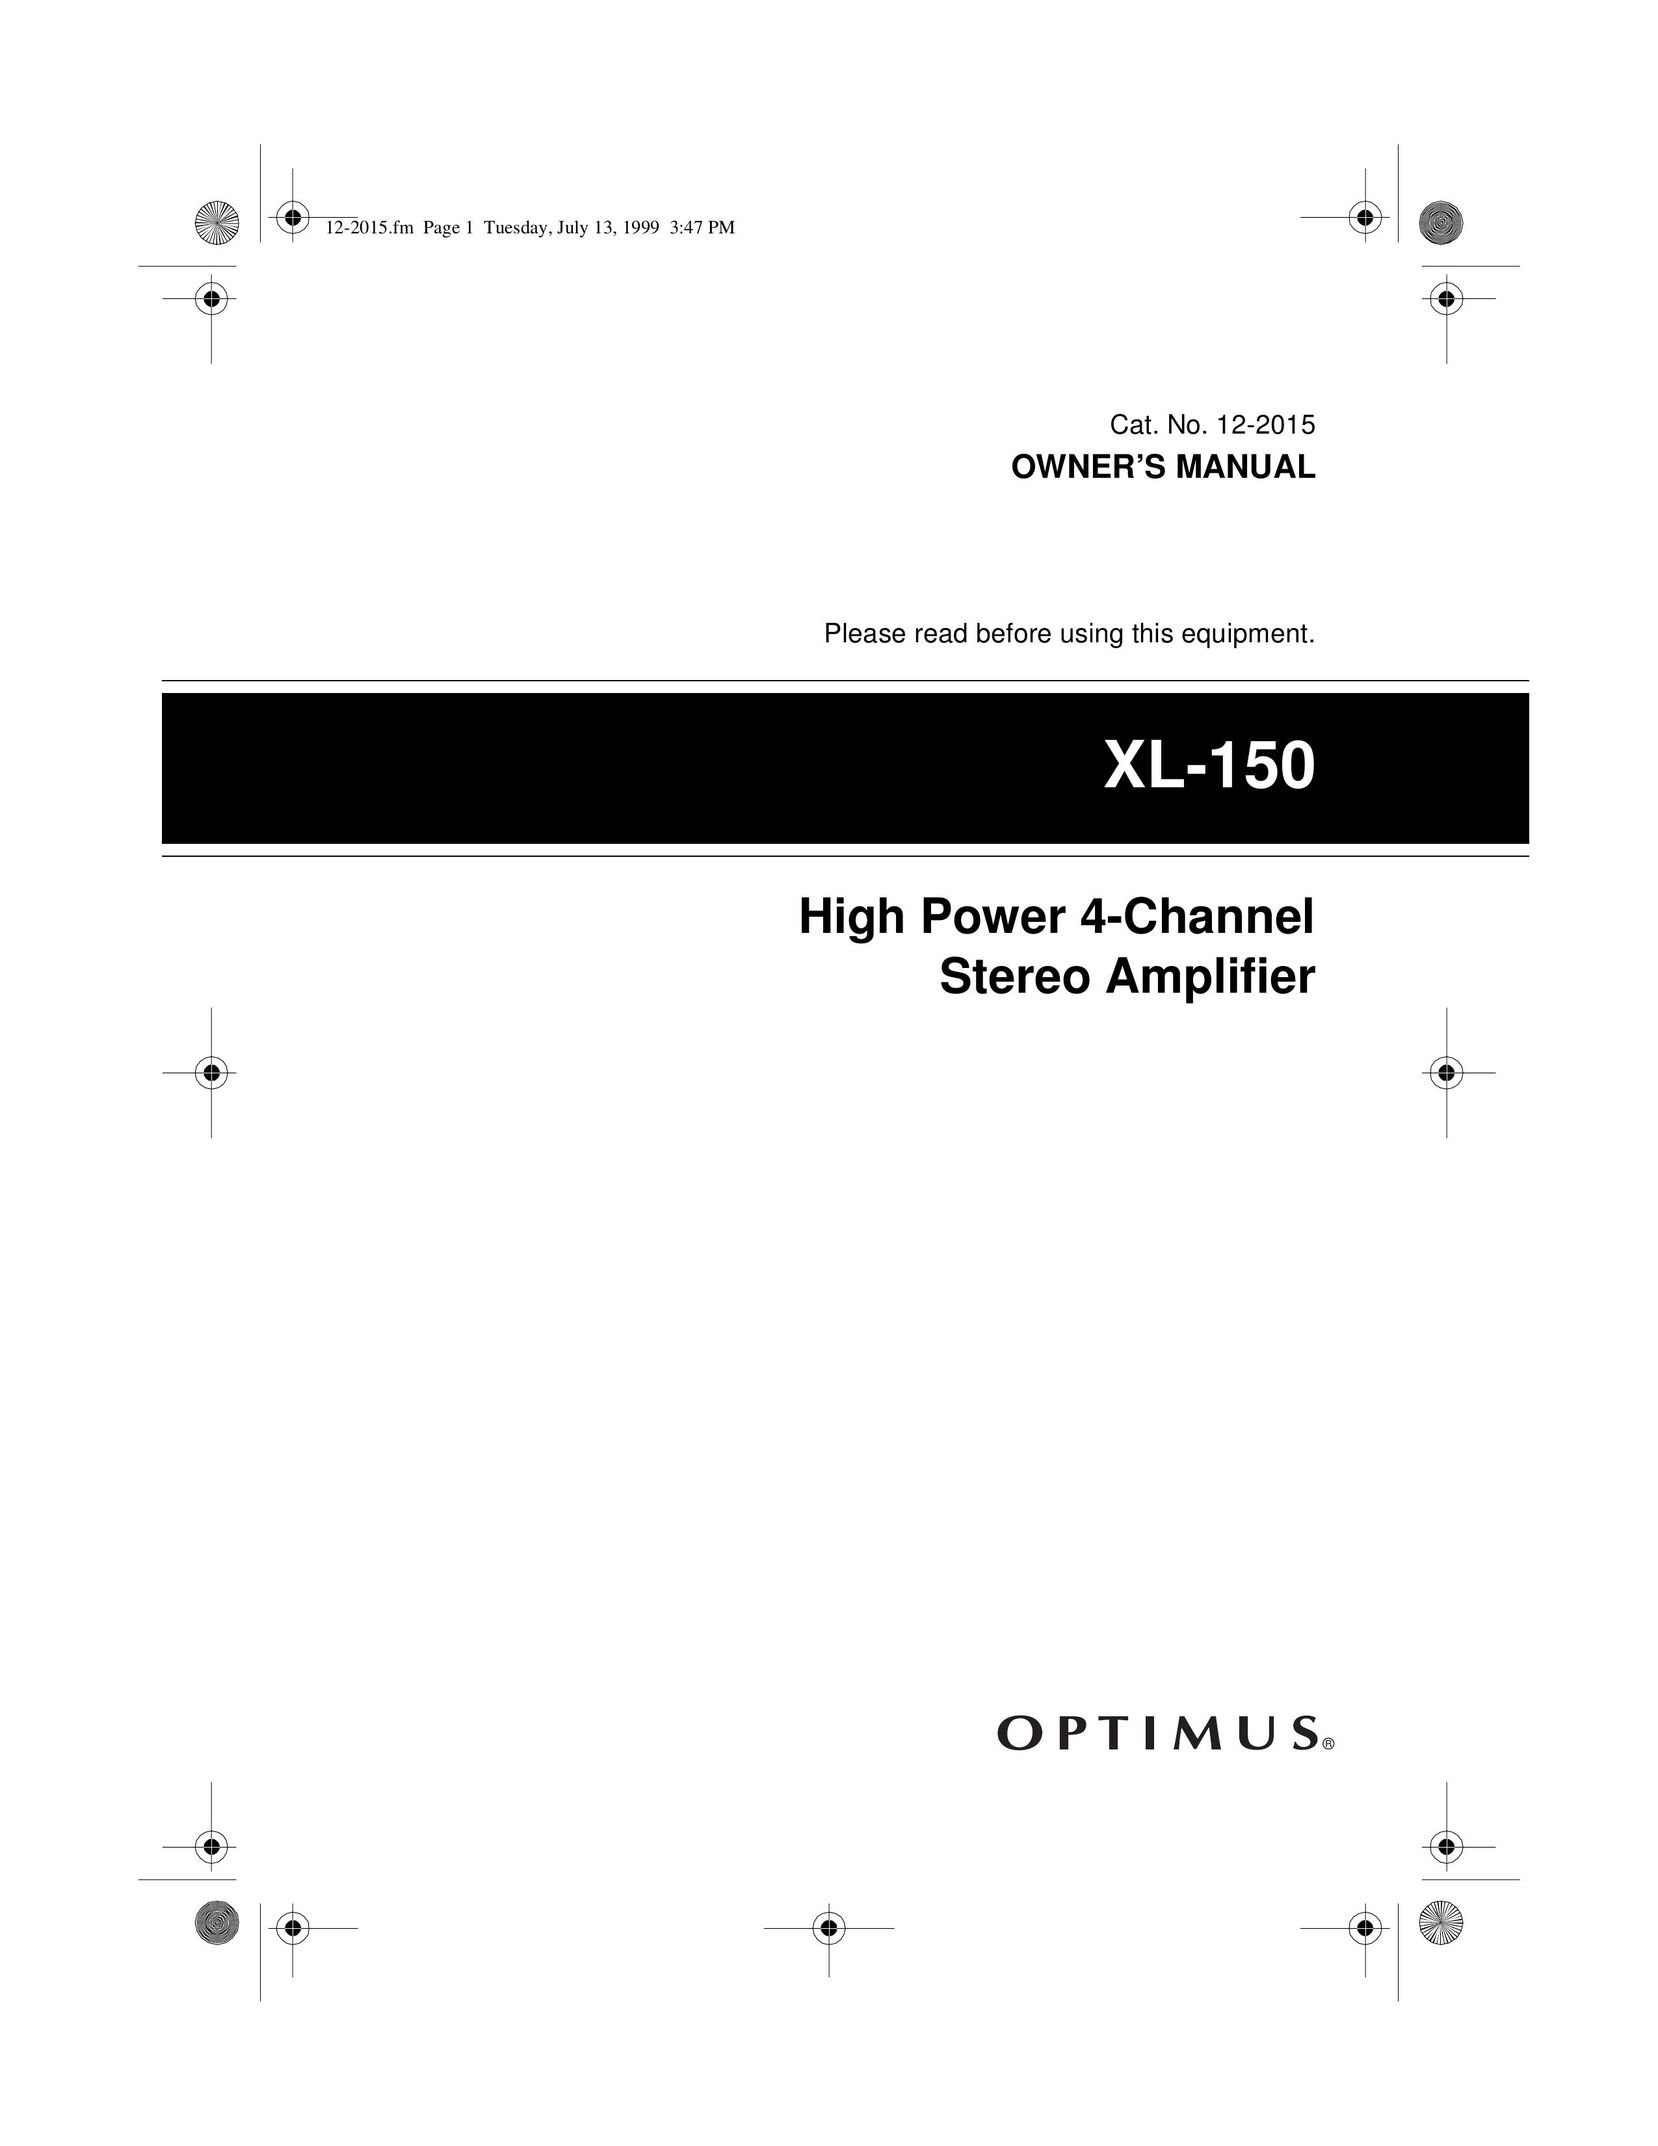 Radio Shack XL-150 Stereo Amplifier User Manual